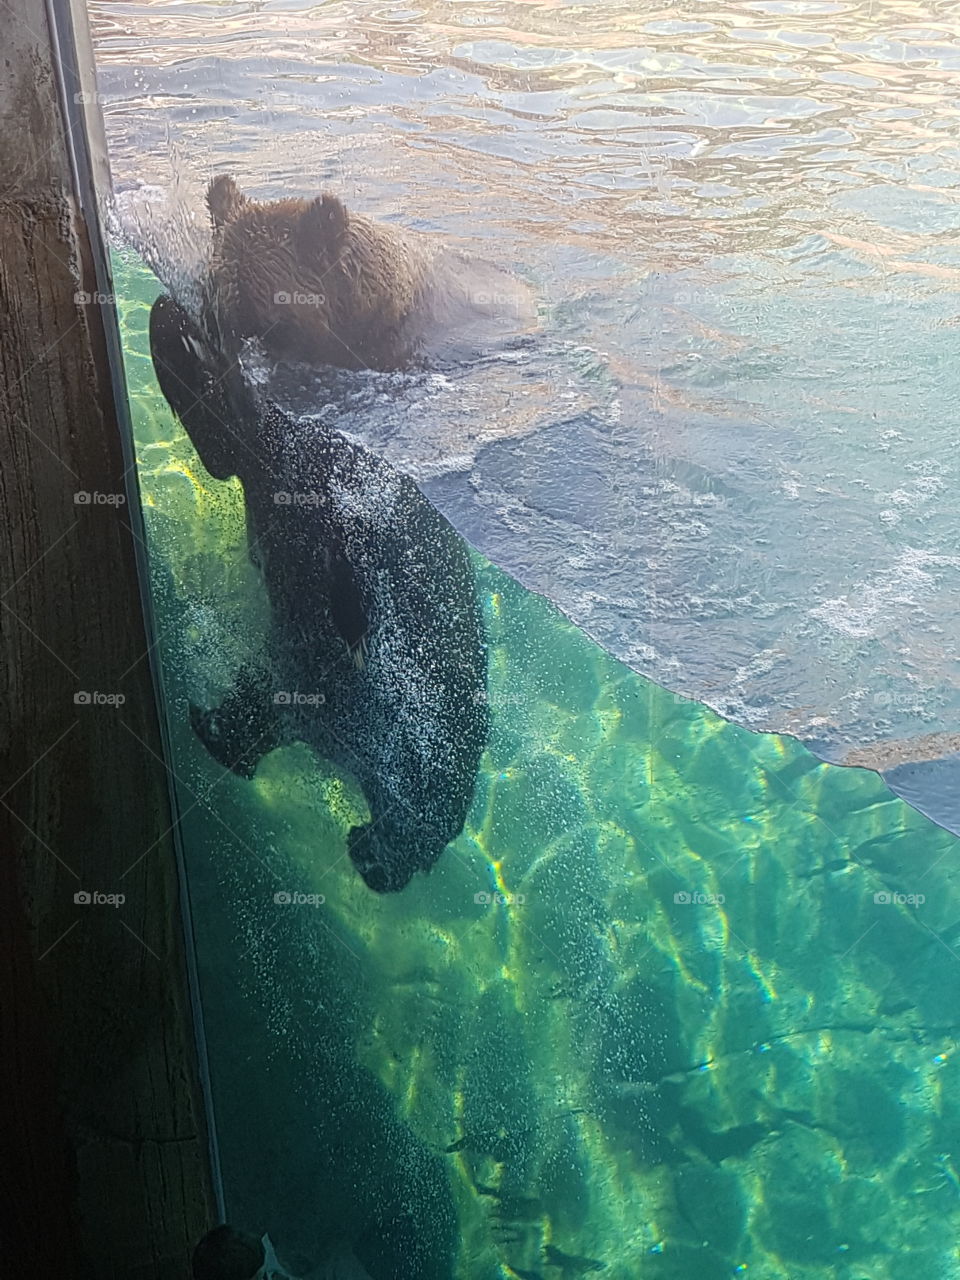 Large Brown bear swimming in zoo habitat peering through glass wall at visitors